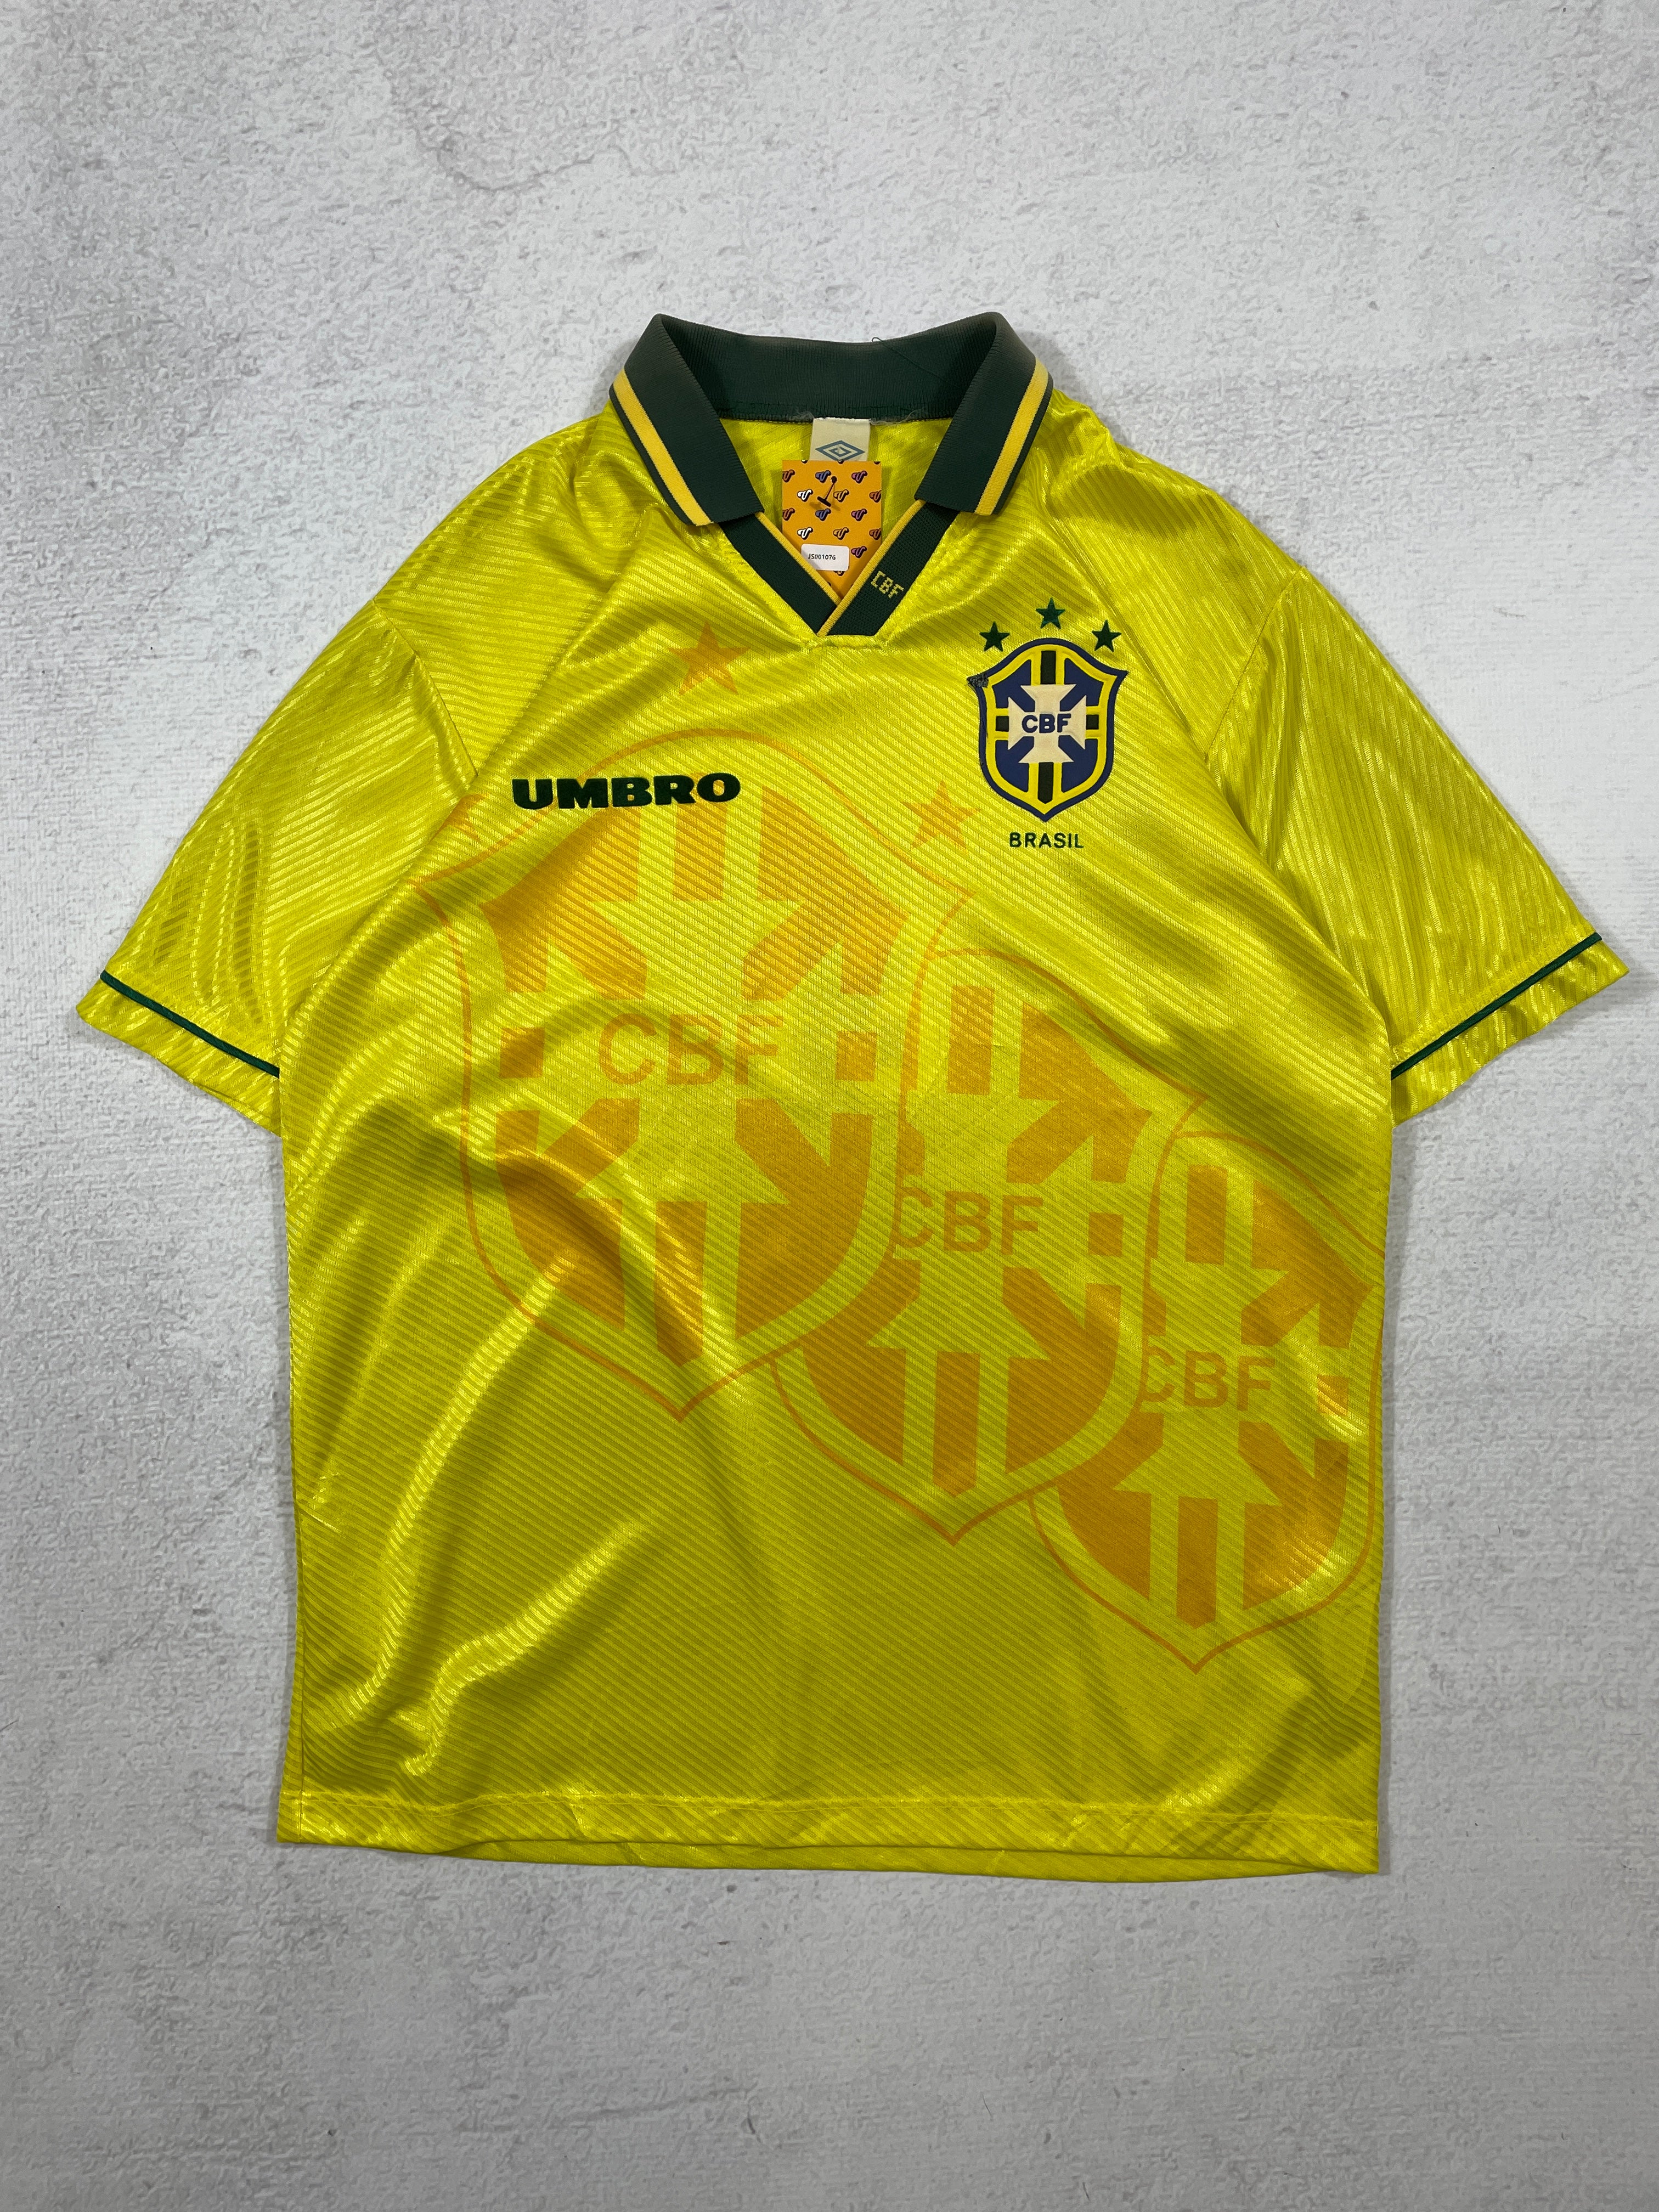 Vintage Umbro Brazil CBF Soccer Club Jersey - Men's Large